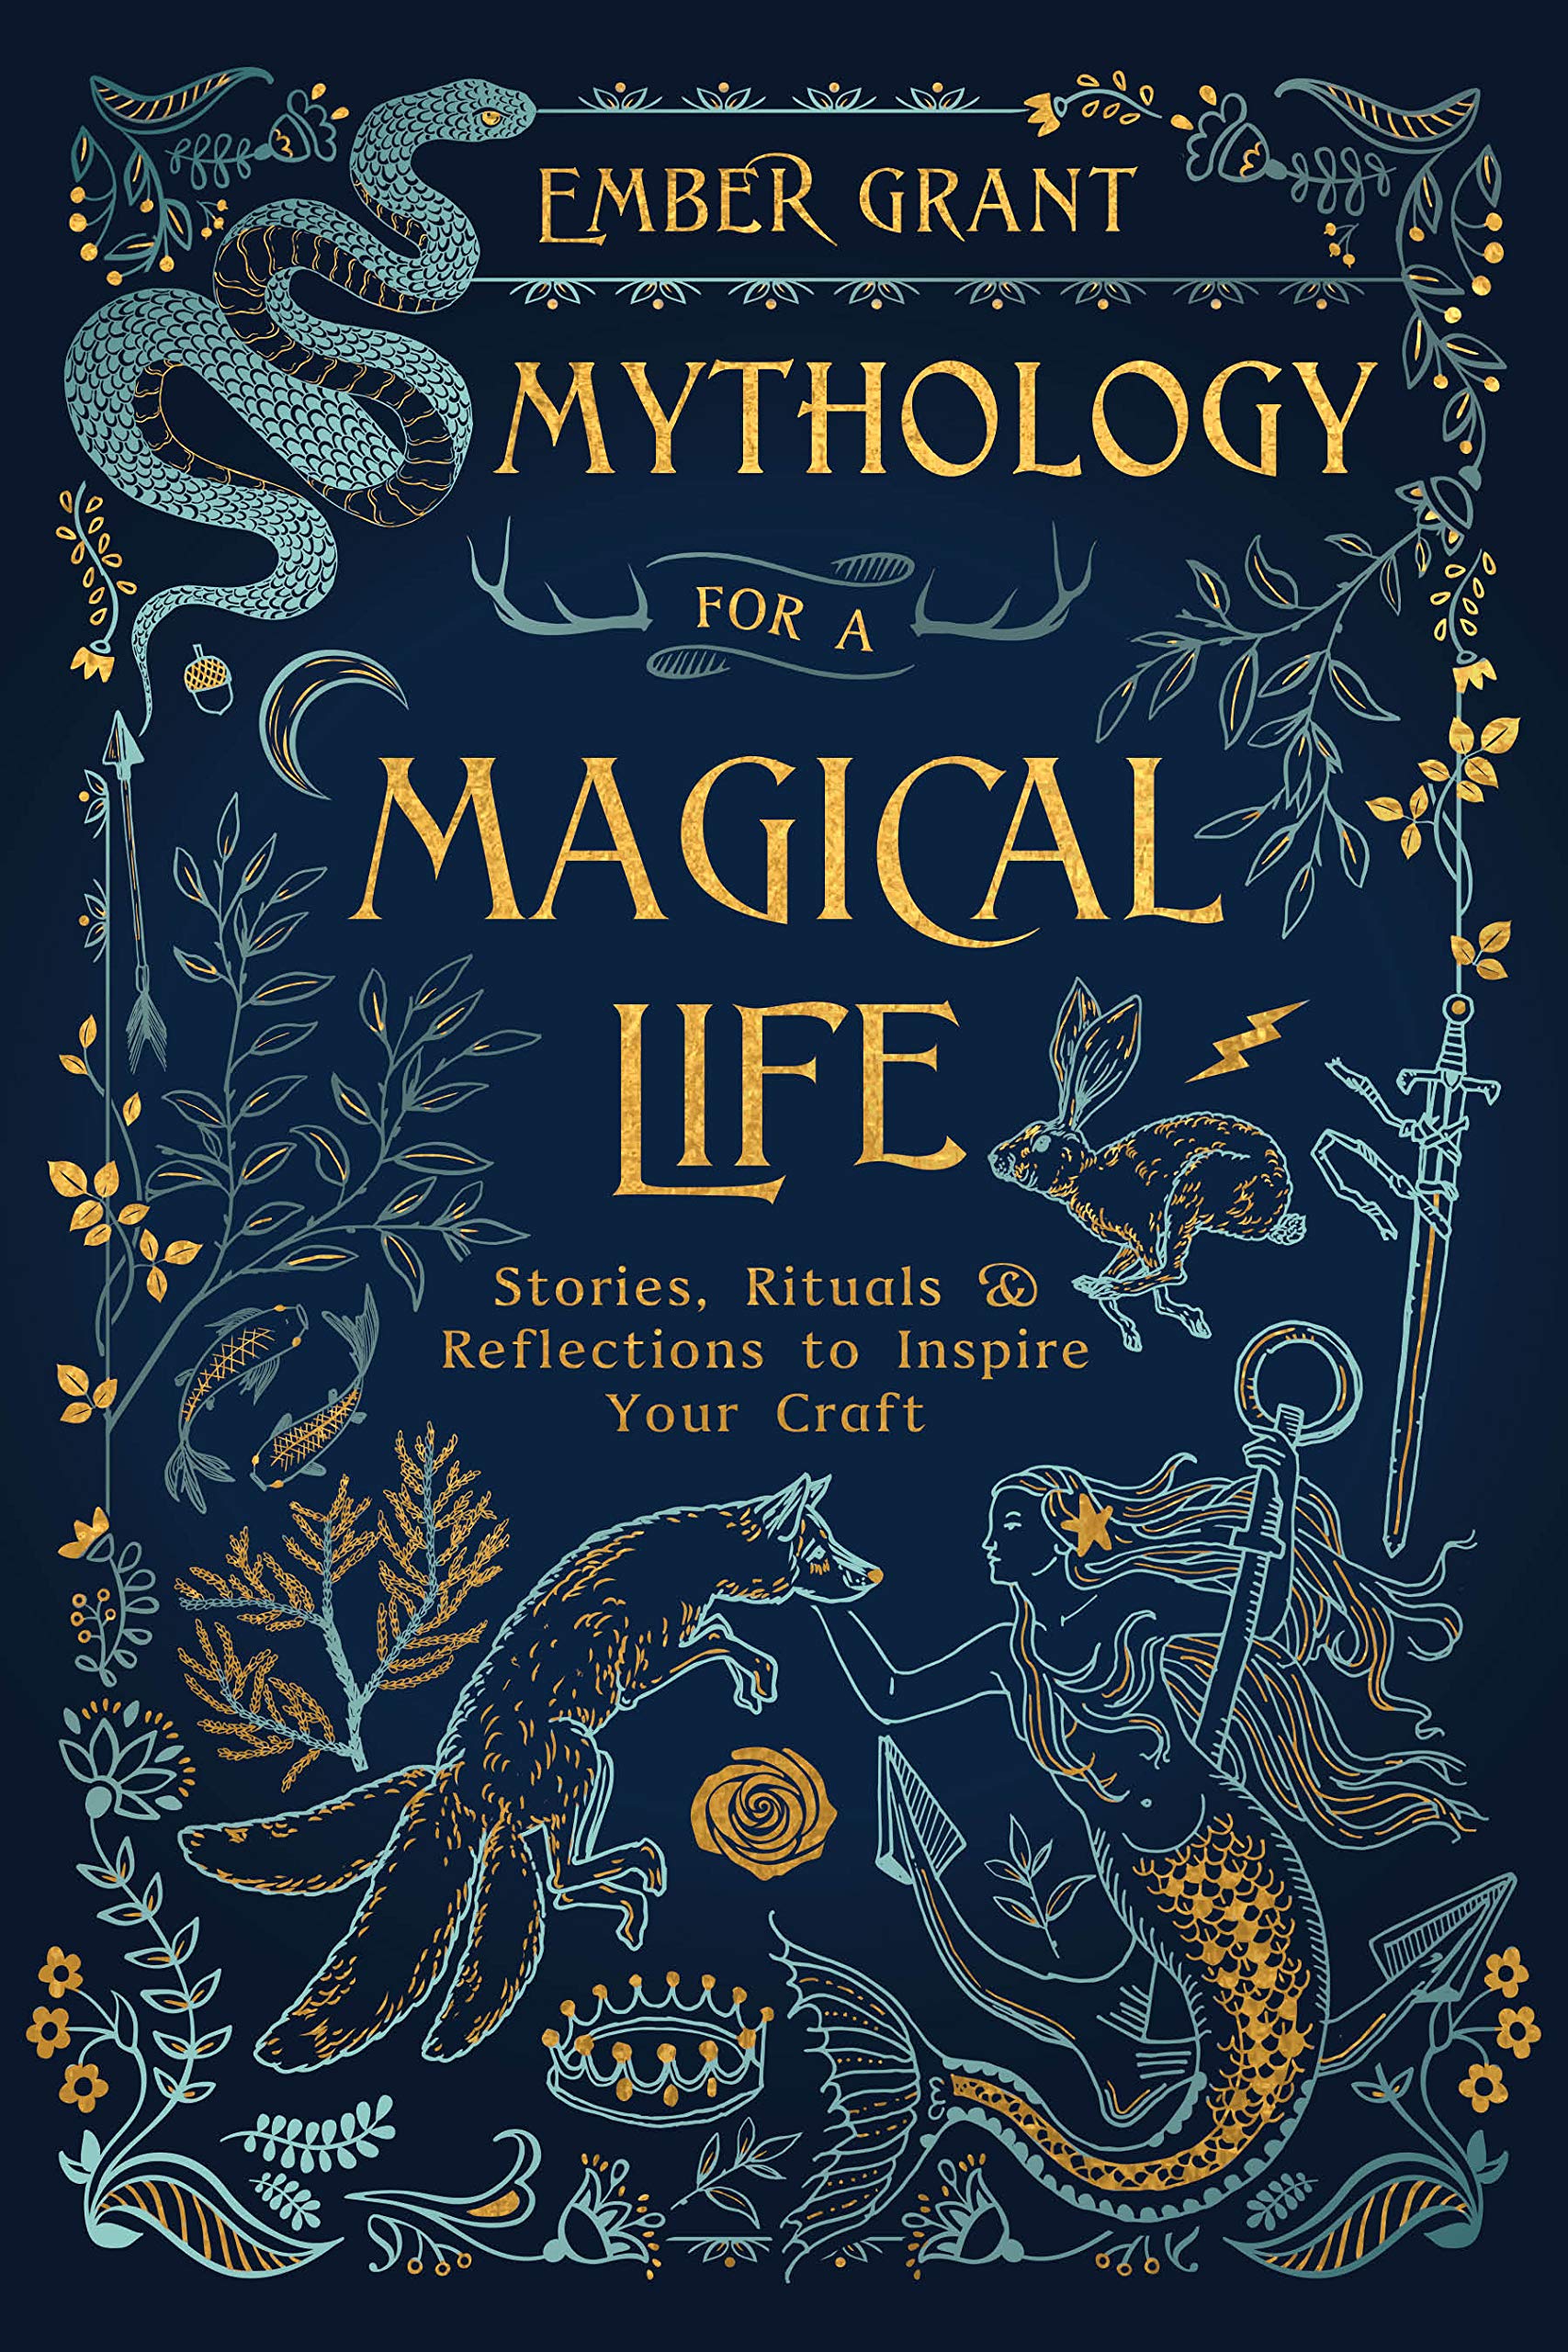 Mythology for a Magical Life | Ember Grant